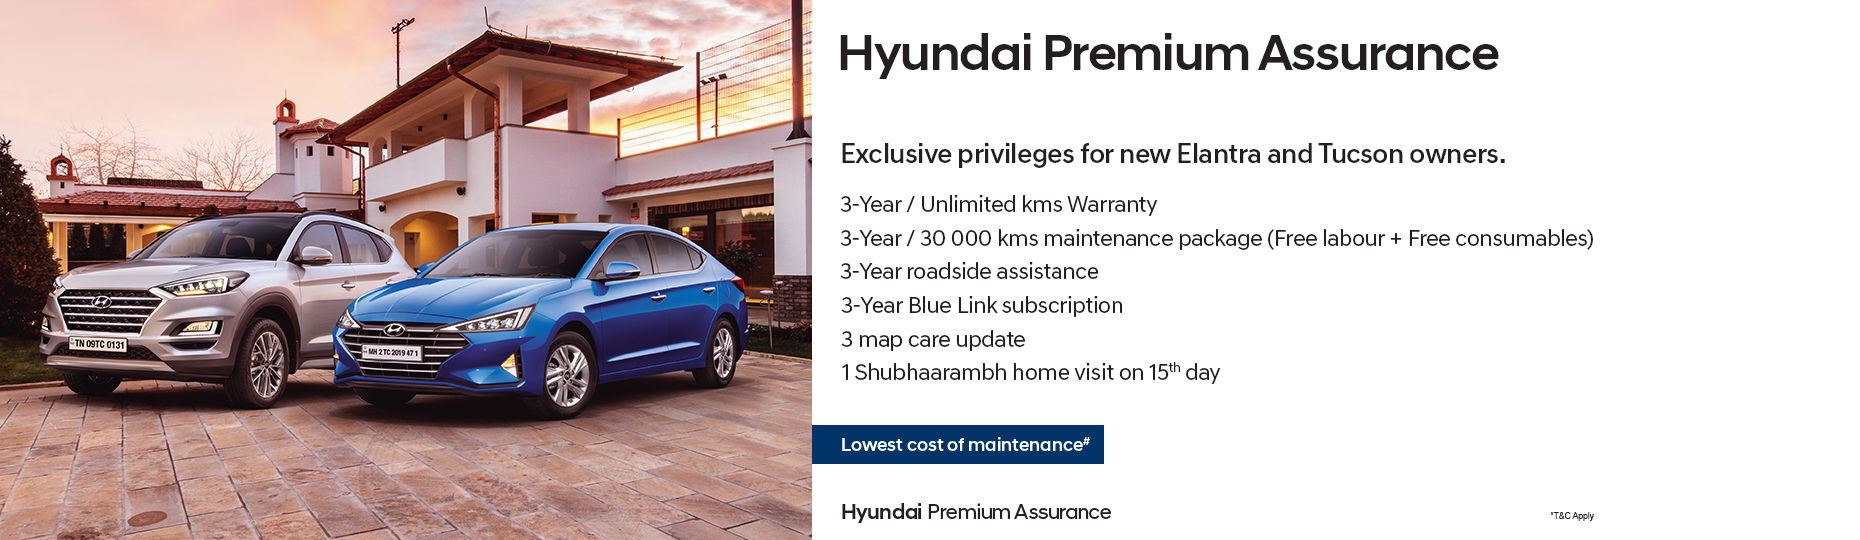 Hyundai Premium Assurance Program  Hyundai Motor India